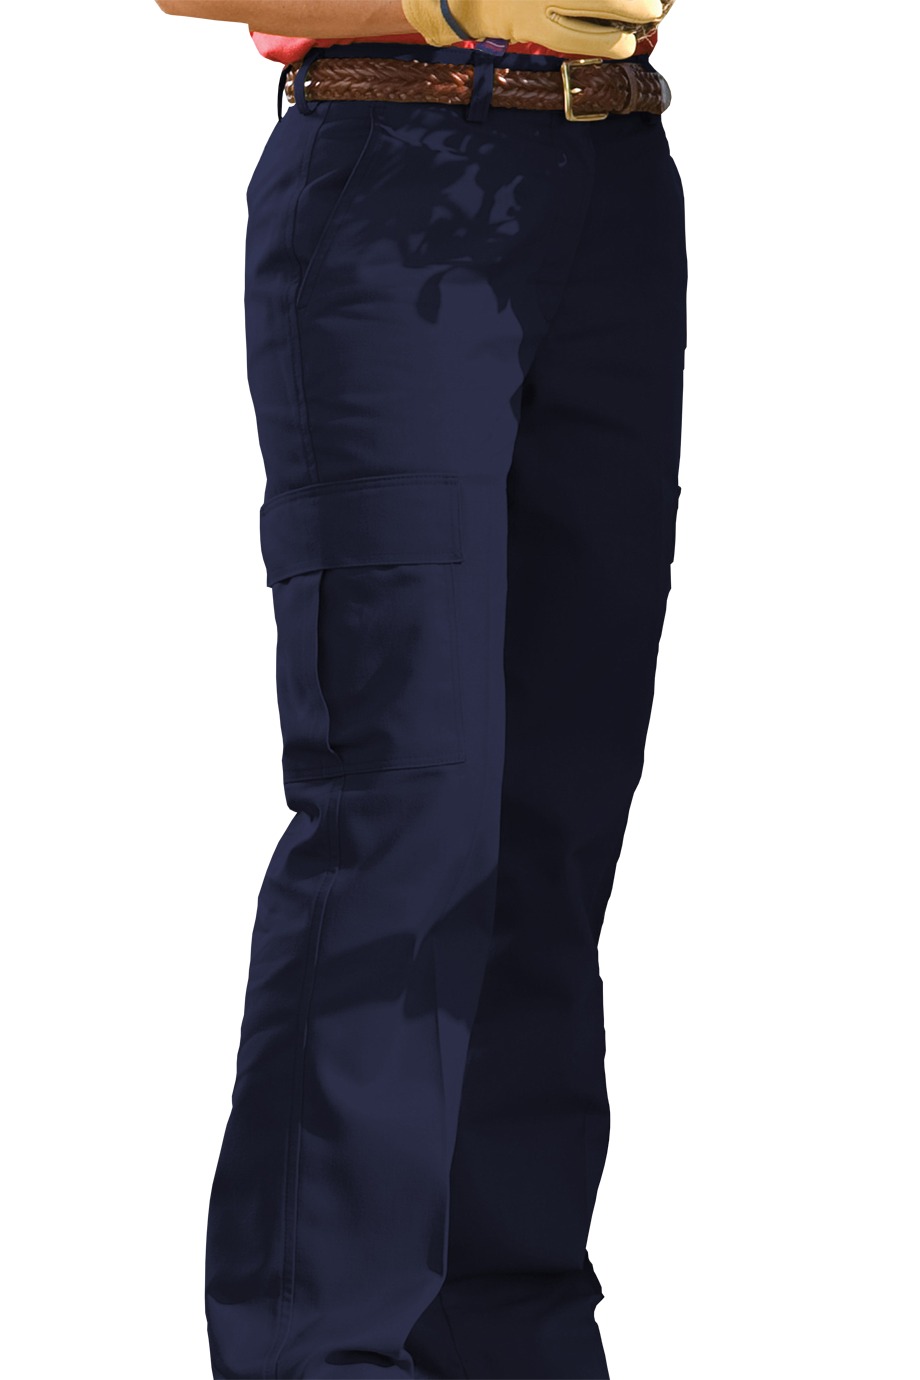 Edwards Garment 8573 - Women's Blended Chino Cargo Pant